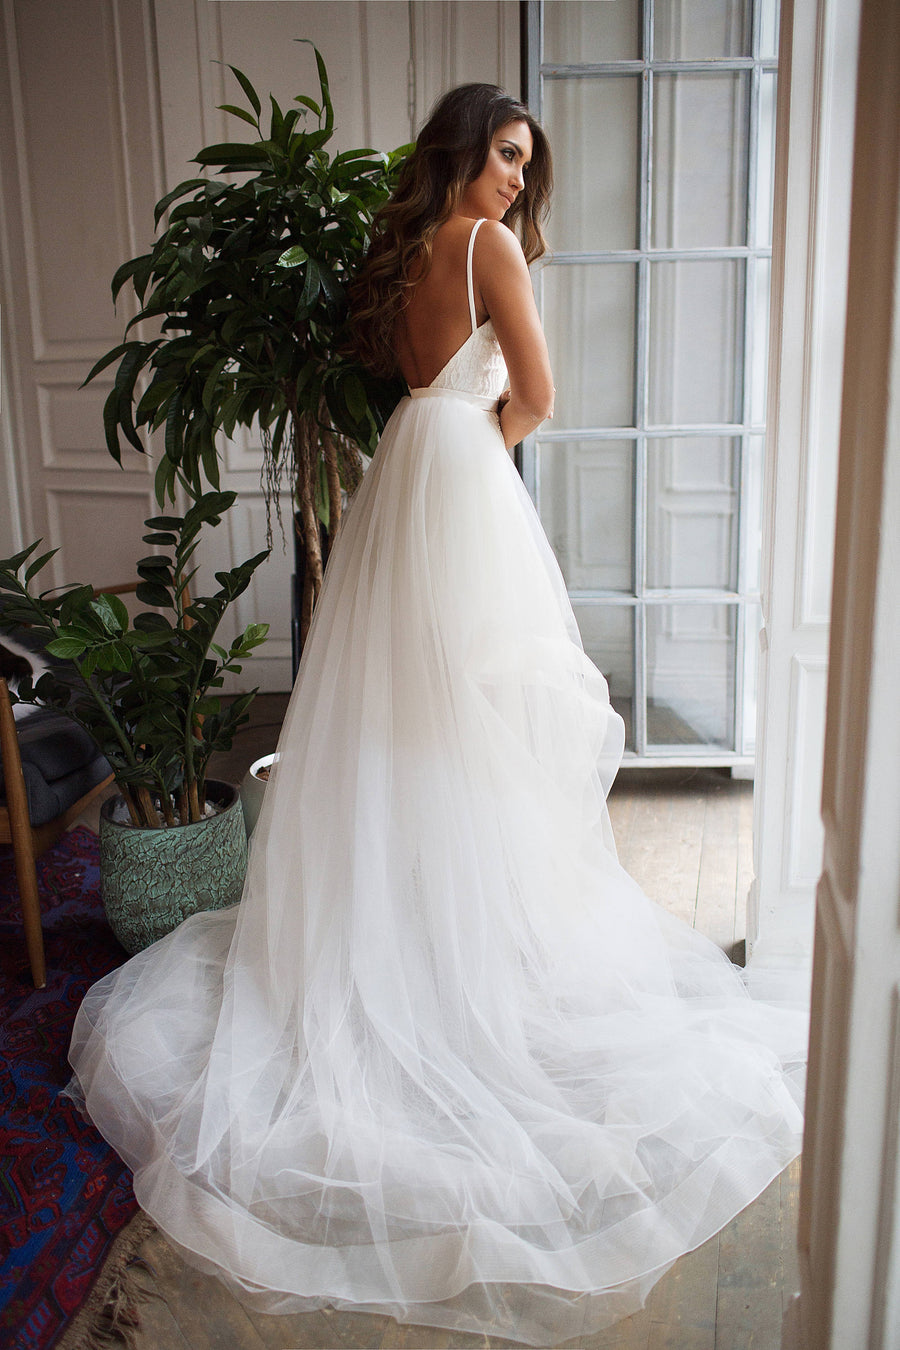 Buy Reception Dress For Bride